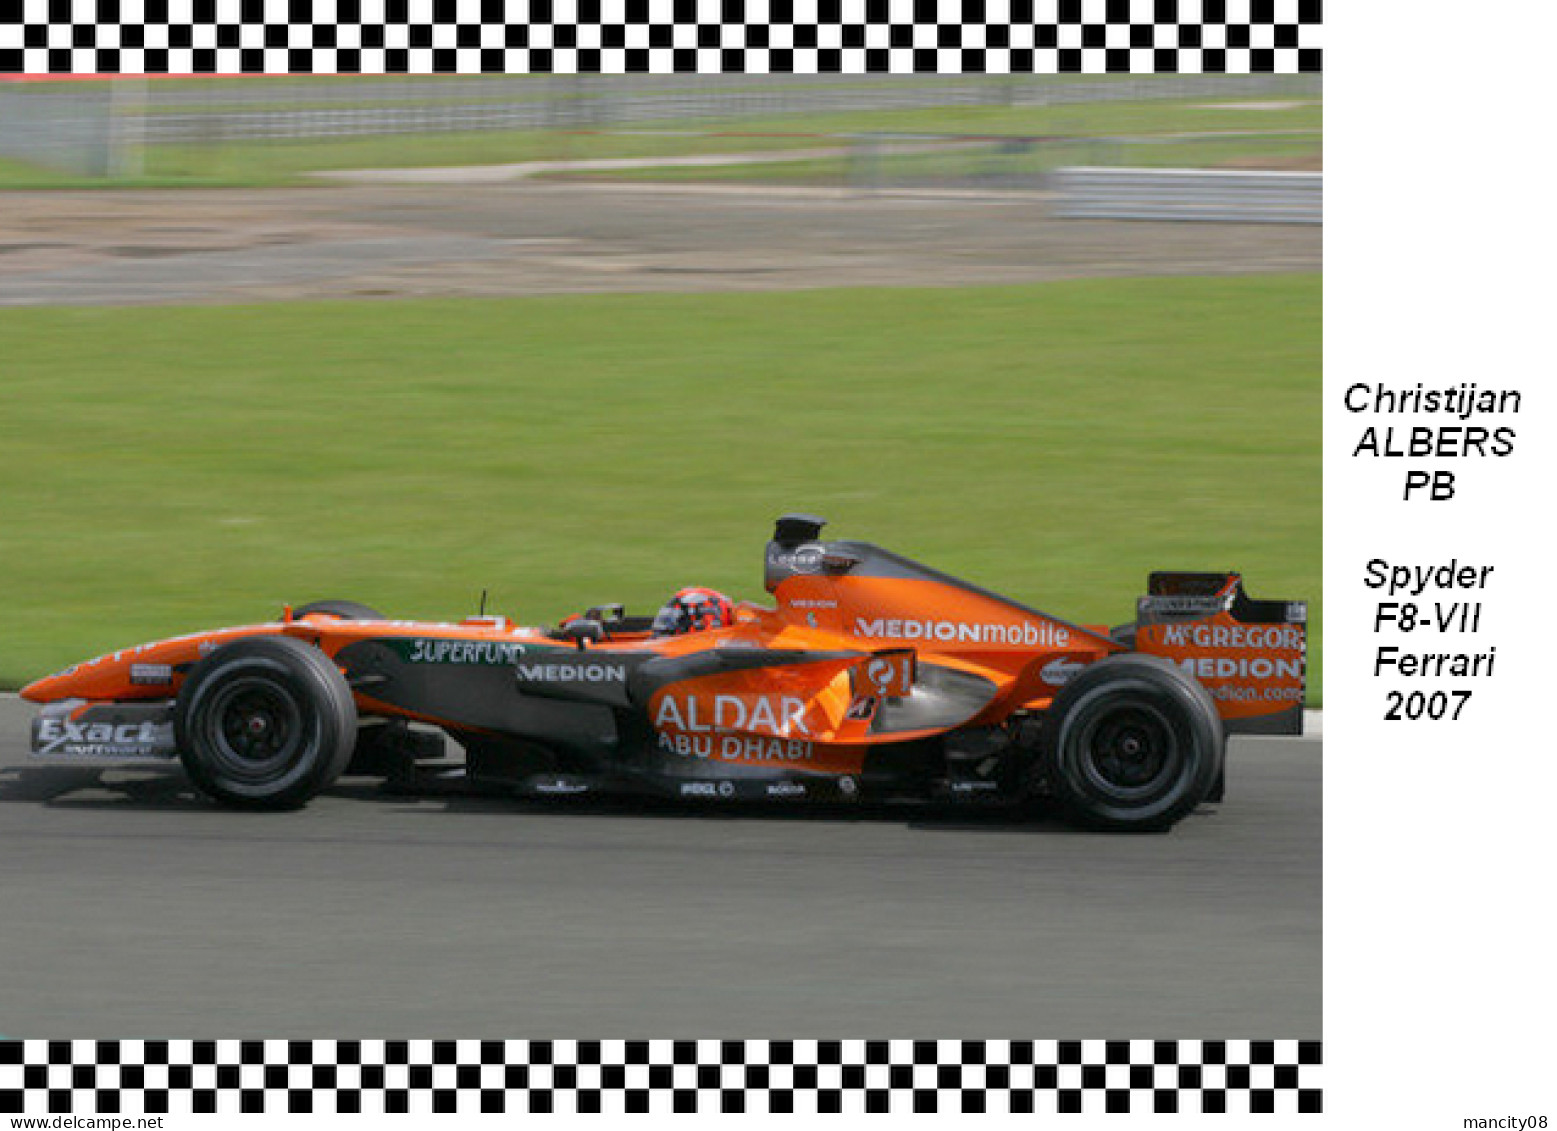 Christijan  Alberts  -  Spyder  F8-VII  2007 - Grand Prix / F1